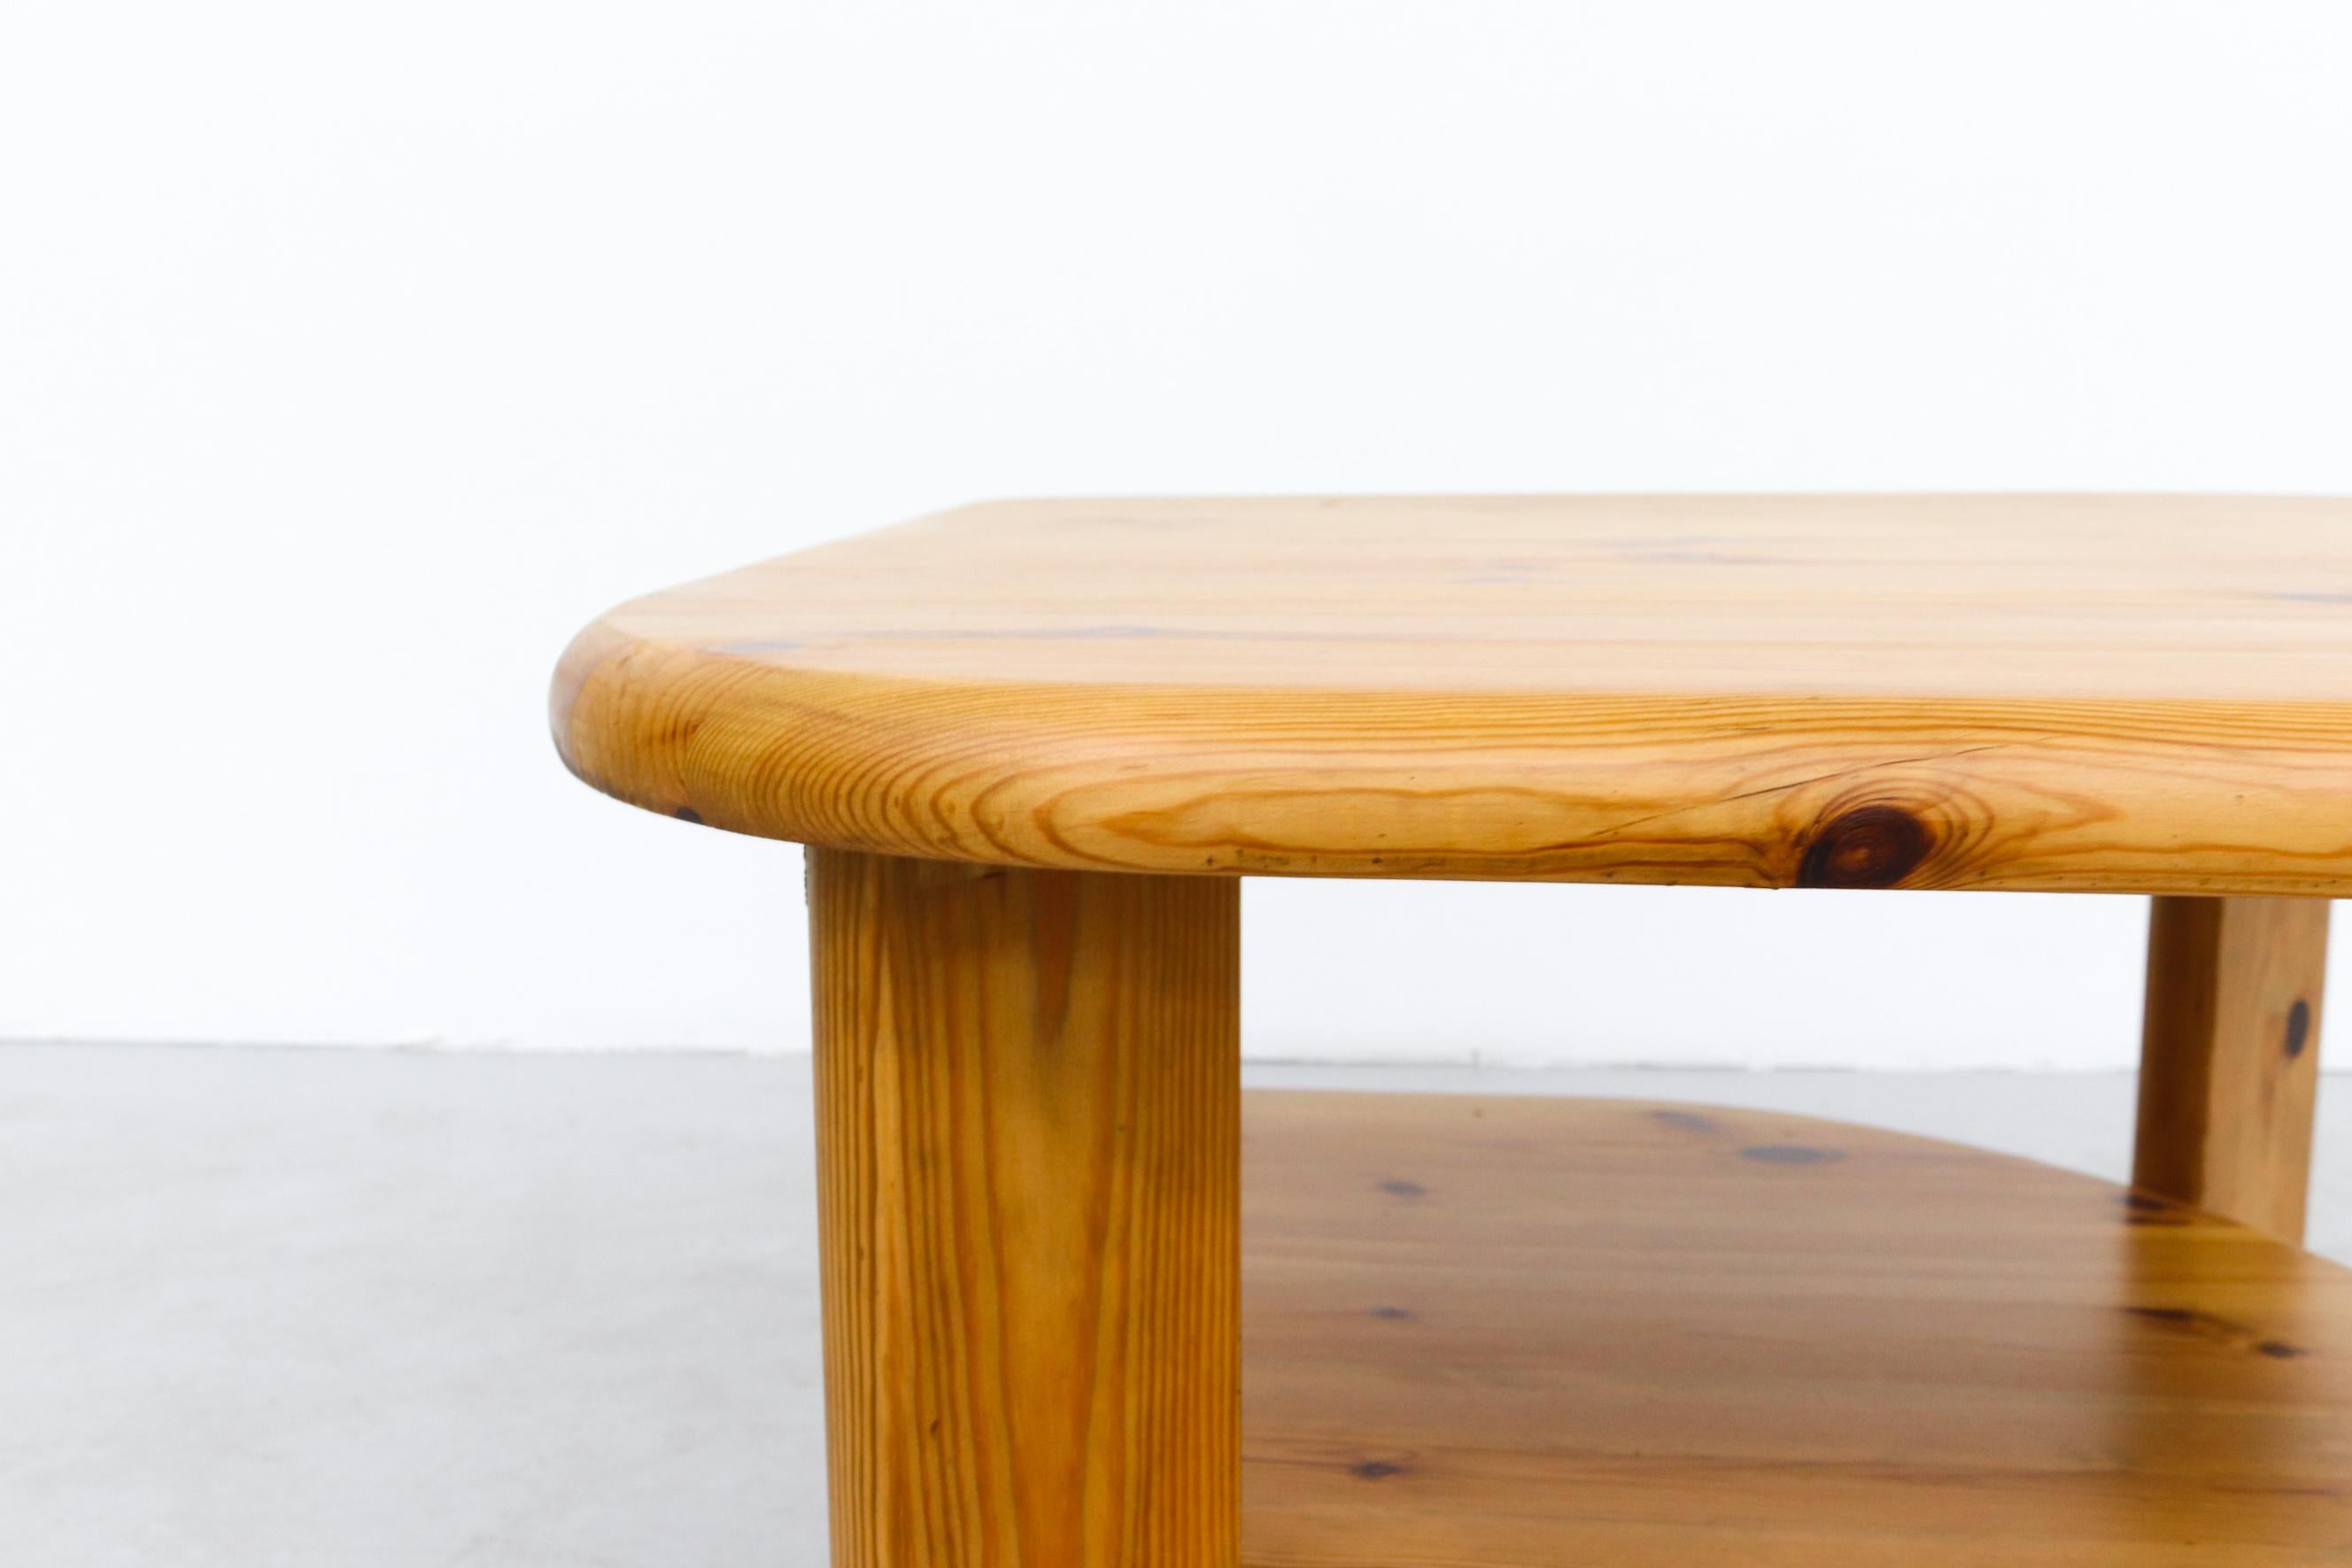 Rainer Daumiller 'Attr' Asymmetric Leaf like Natural Pine Side Table For Sale 6